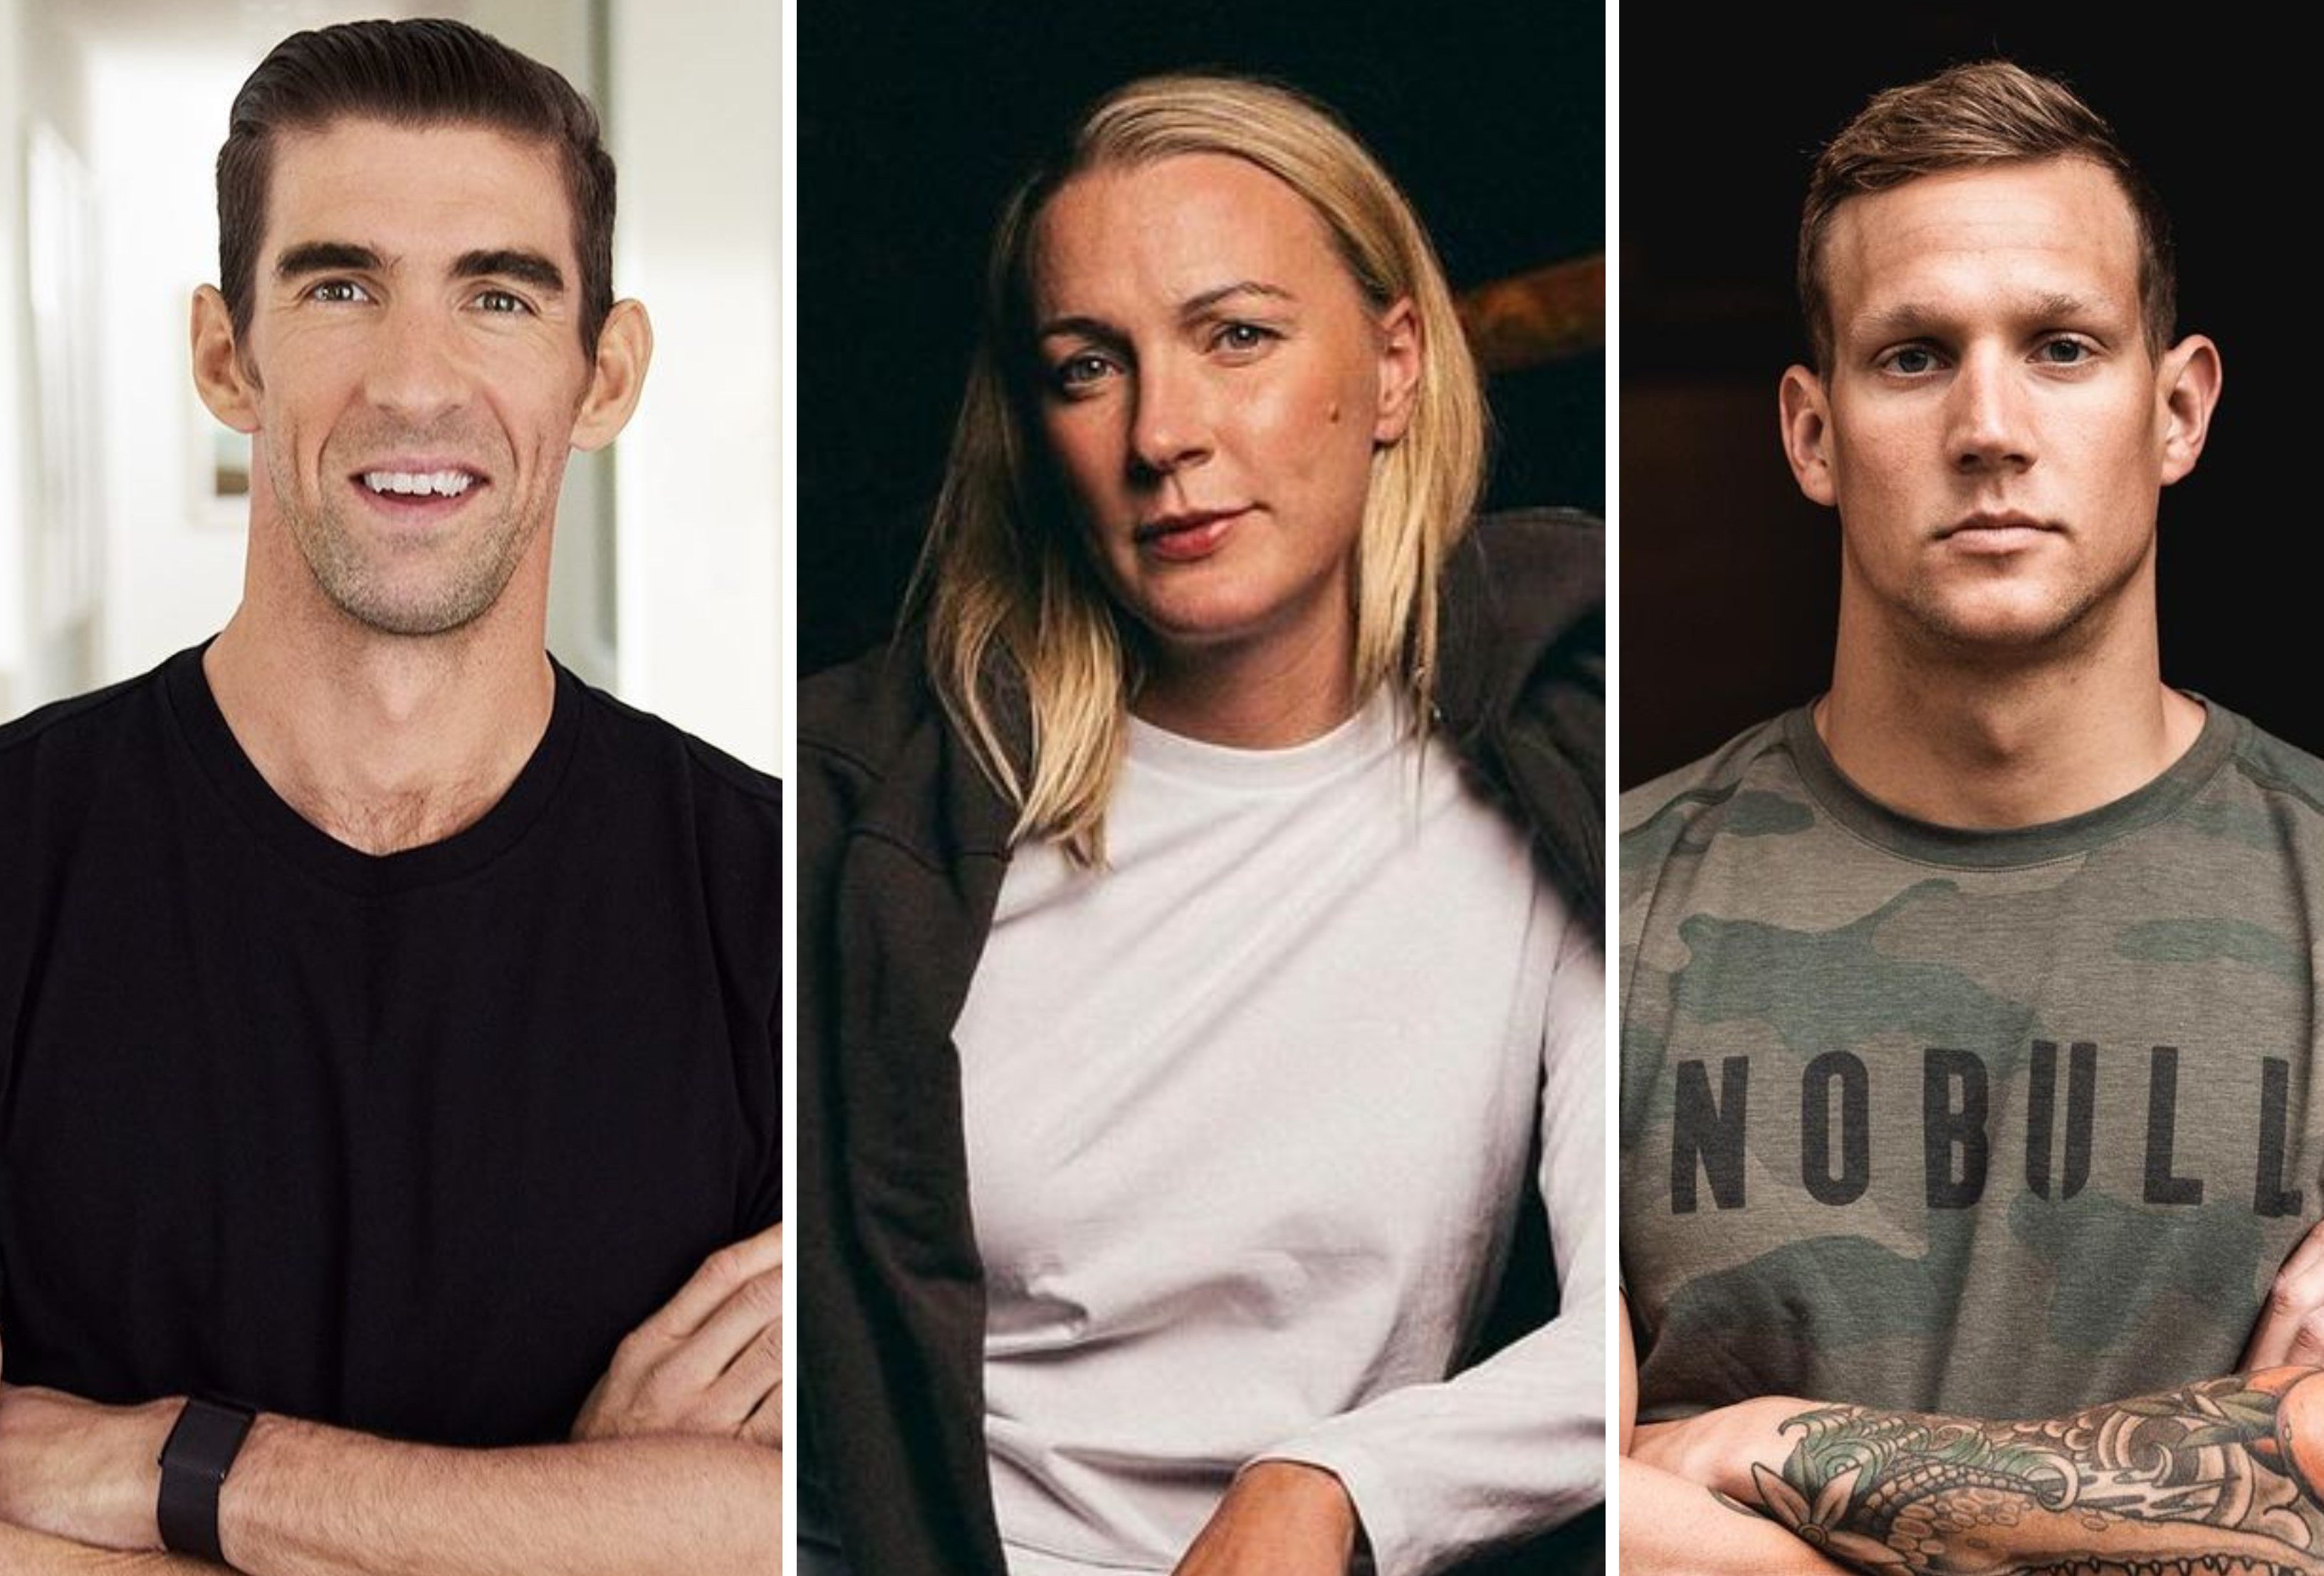 Michael Phelps, Sarah Sjöström and Caeleb Dressel are among the richest swimmers in the world. Photos: @caelebdressel, @m_phelps00, @sarahsjostrom/Instagram